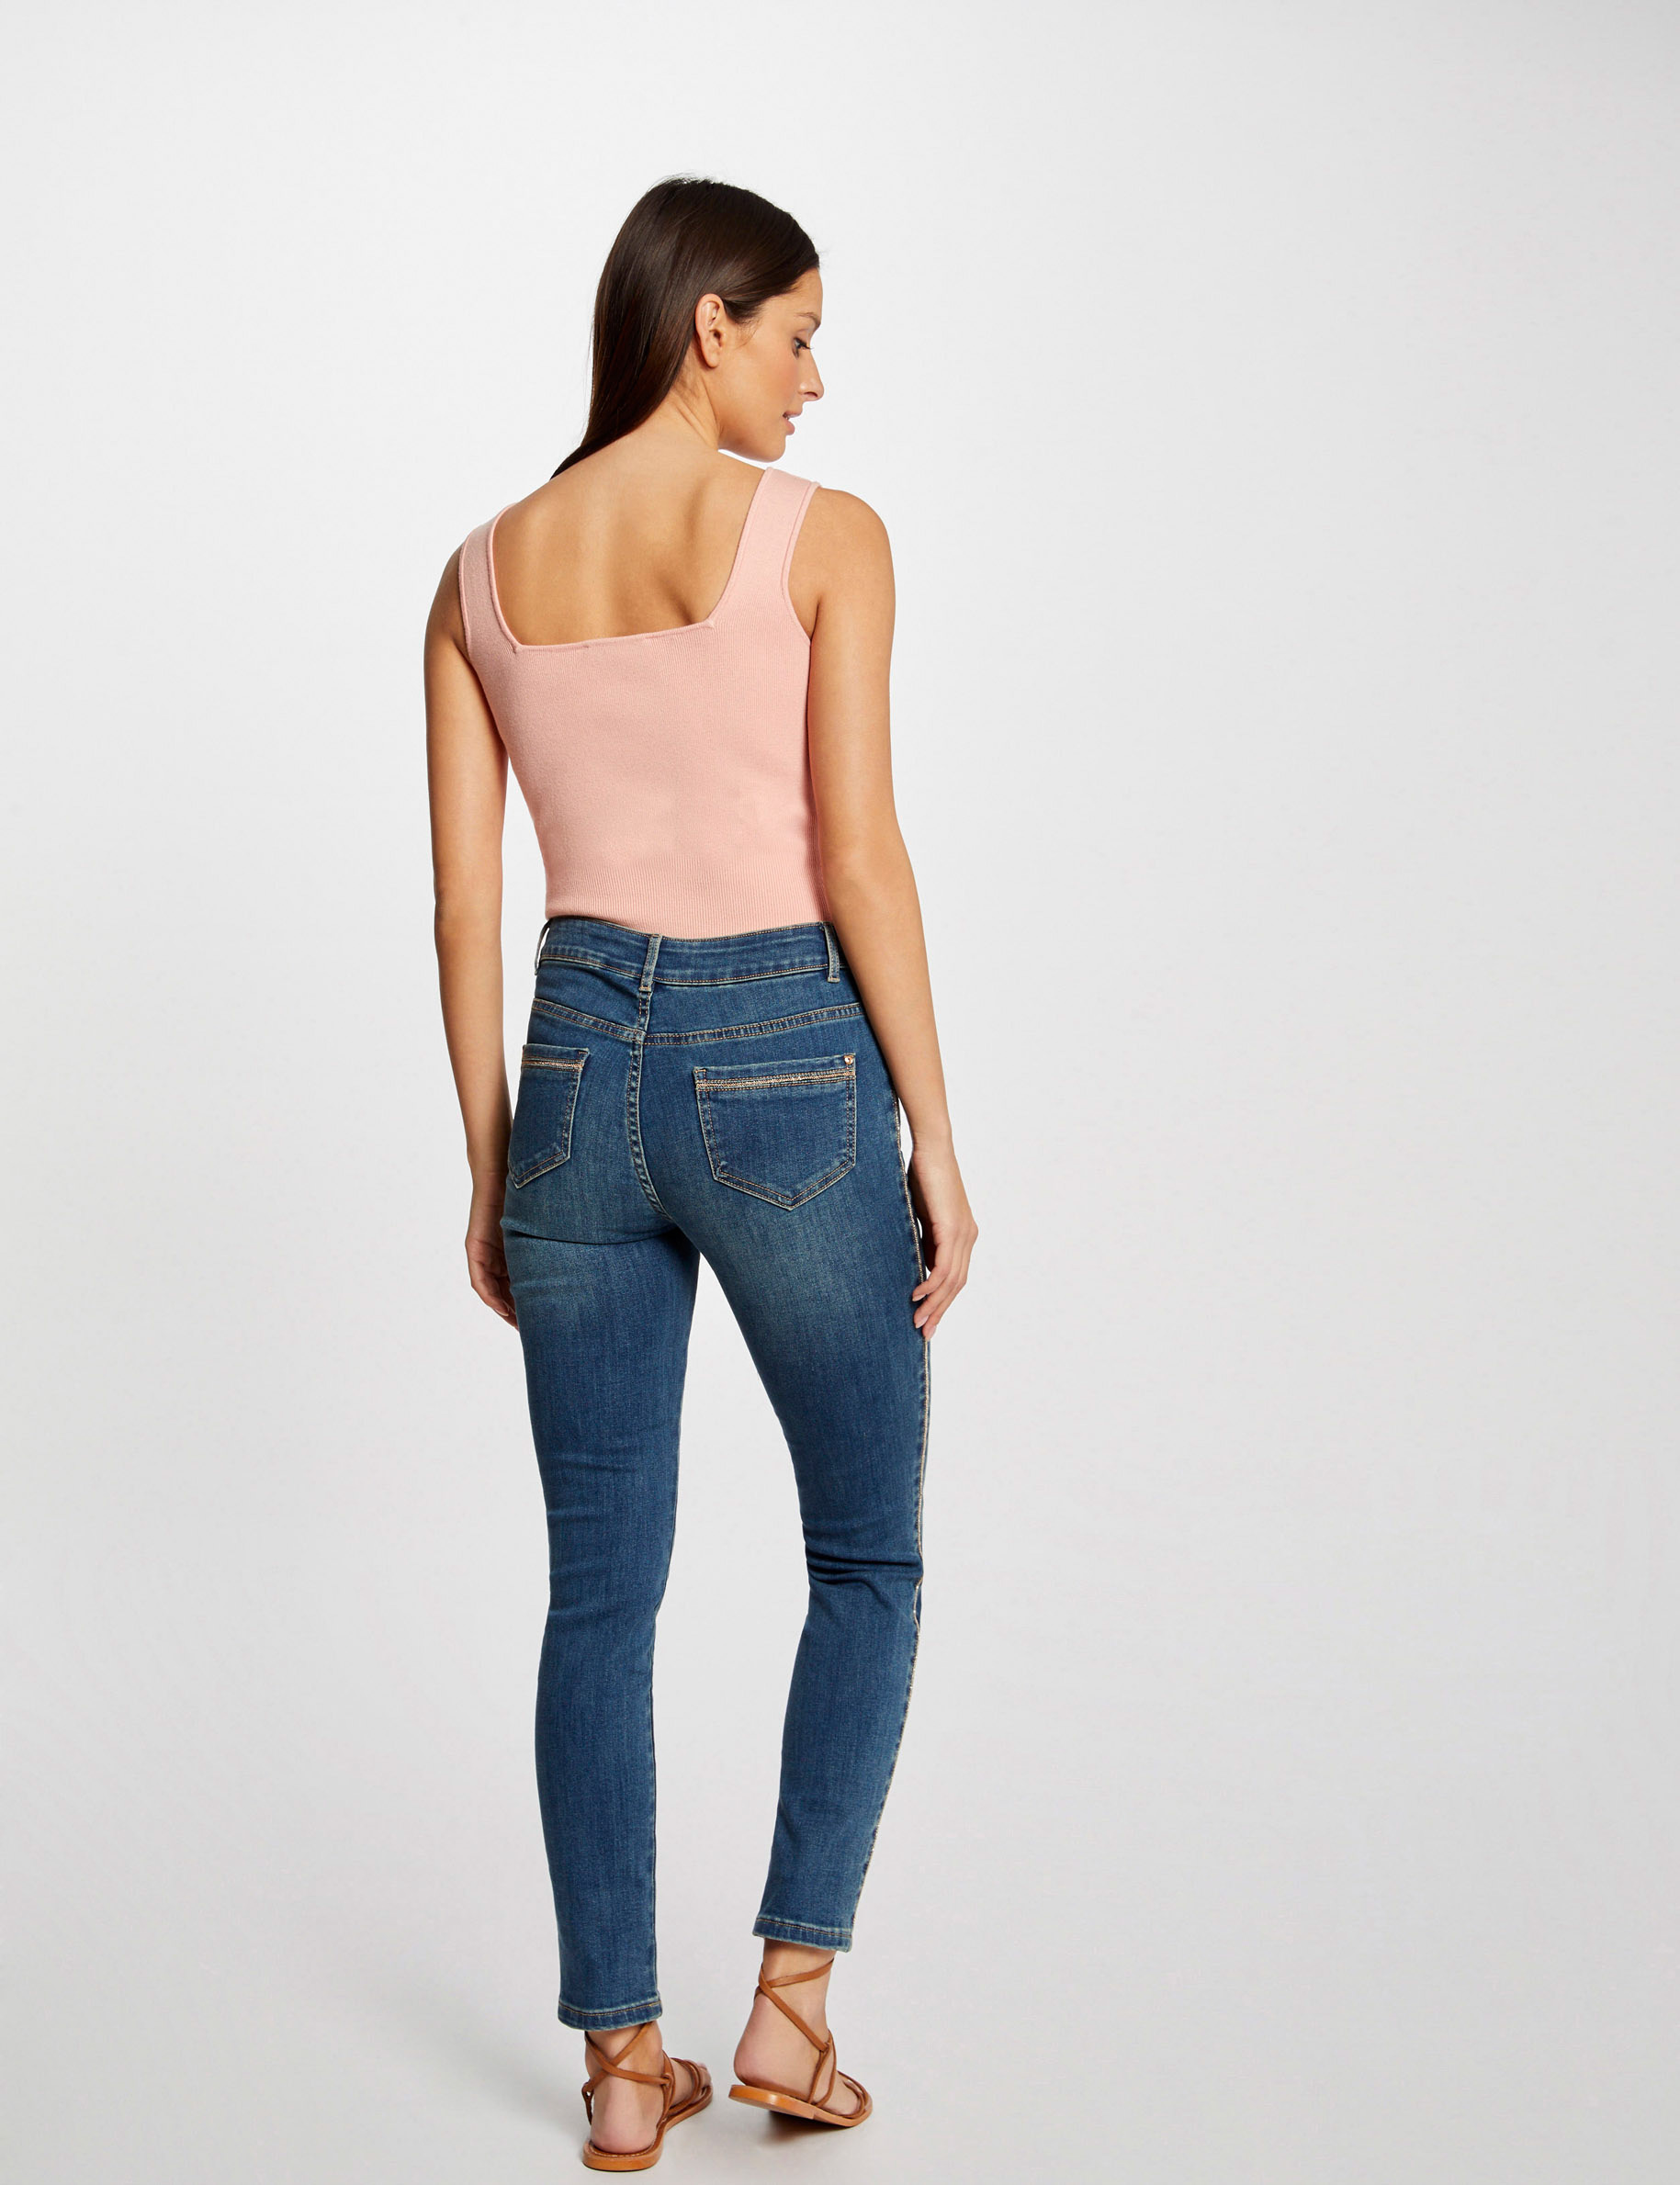 Slim jeans with rhinestones strips stone denim ladies'